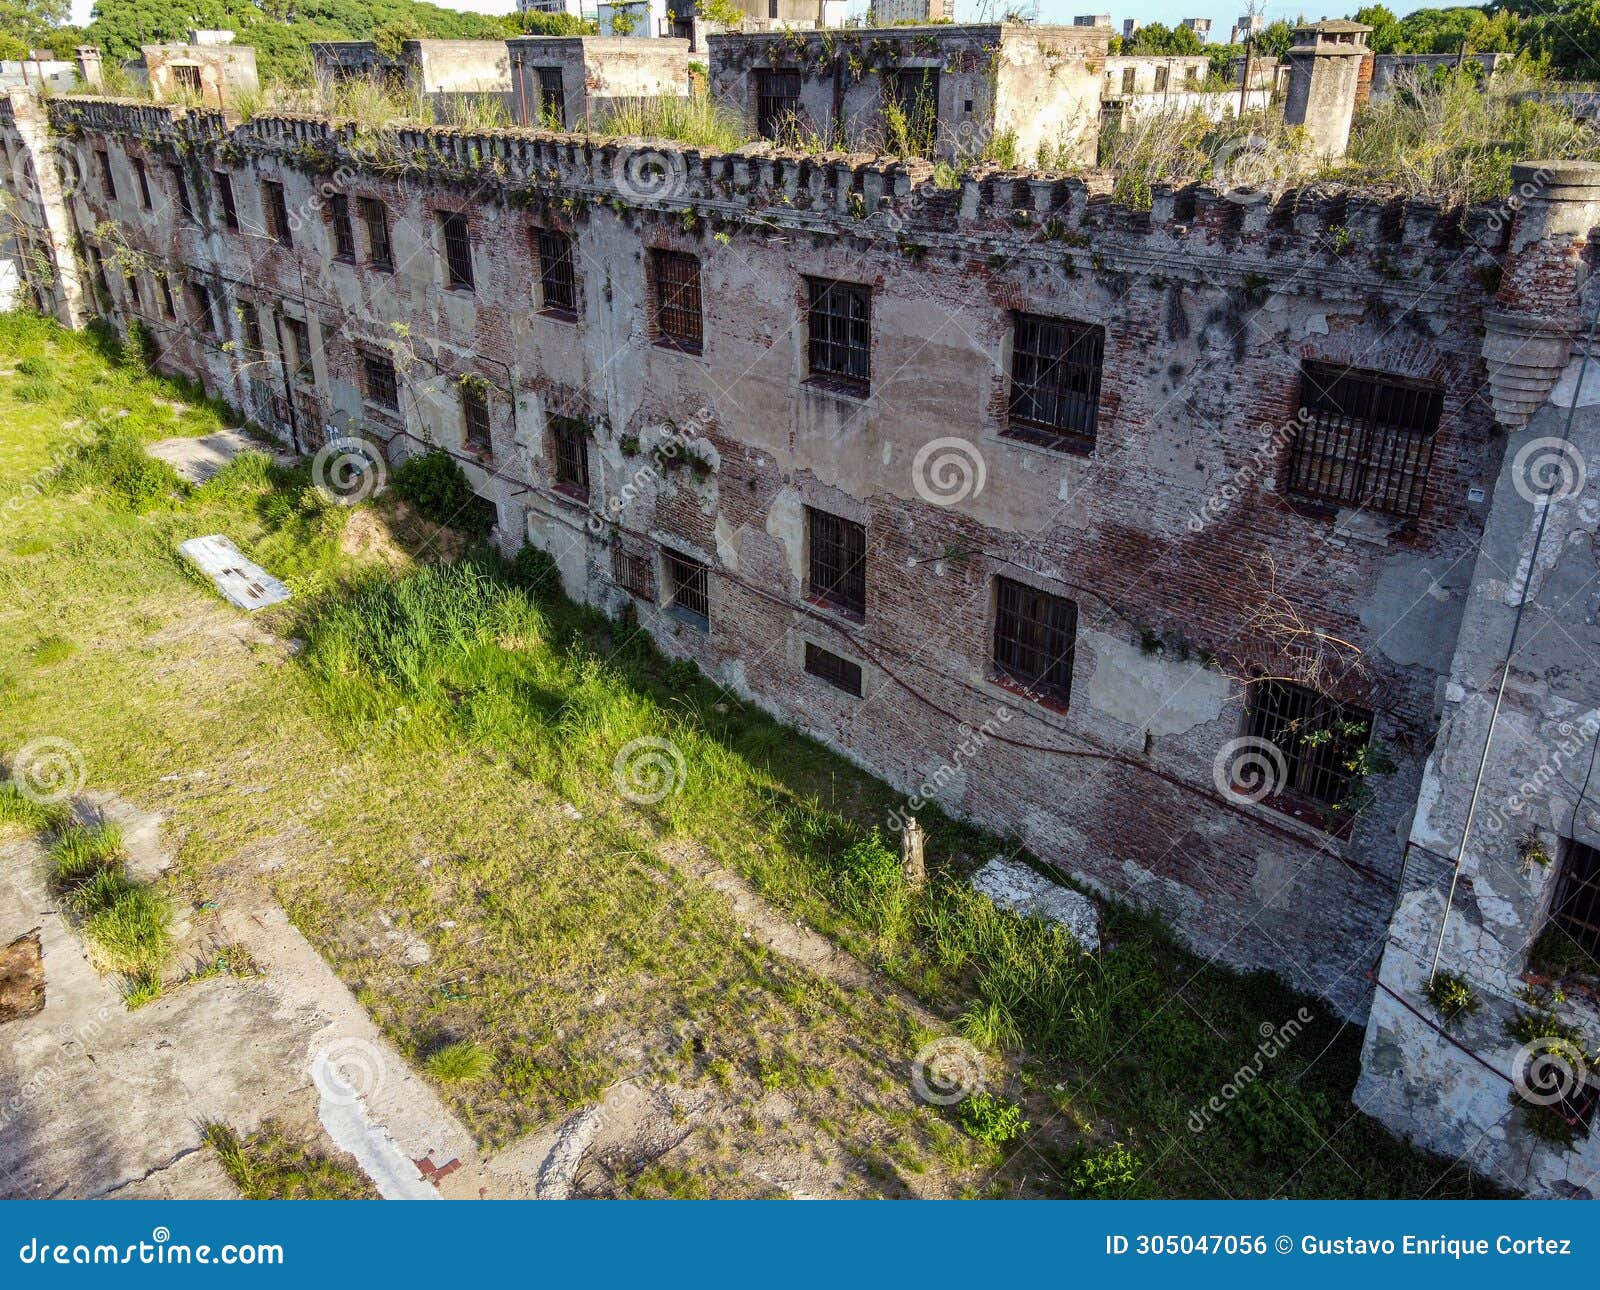 high and impassable walls of the abandonate carcel de caseros in parque patricios